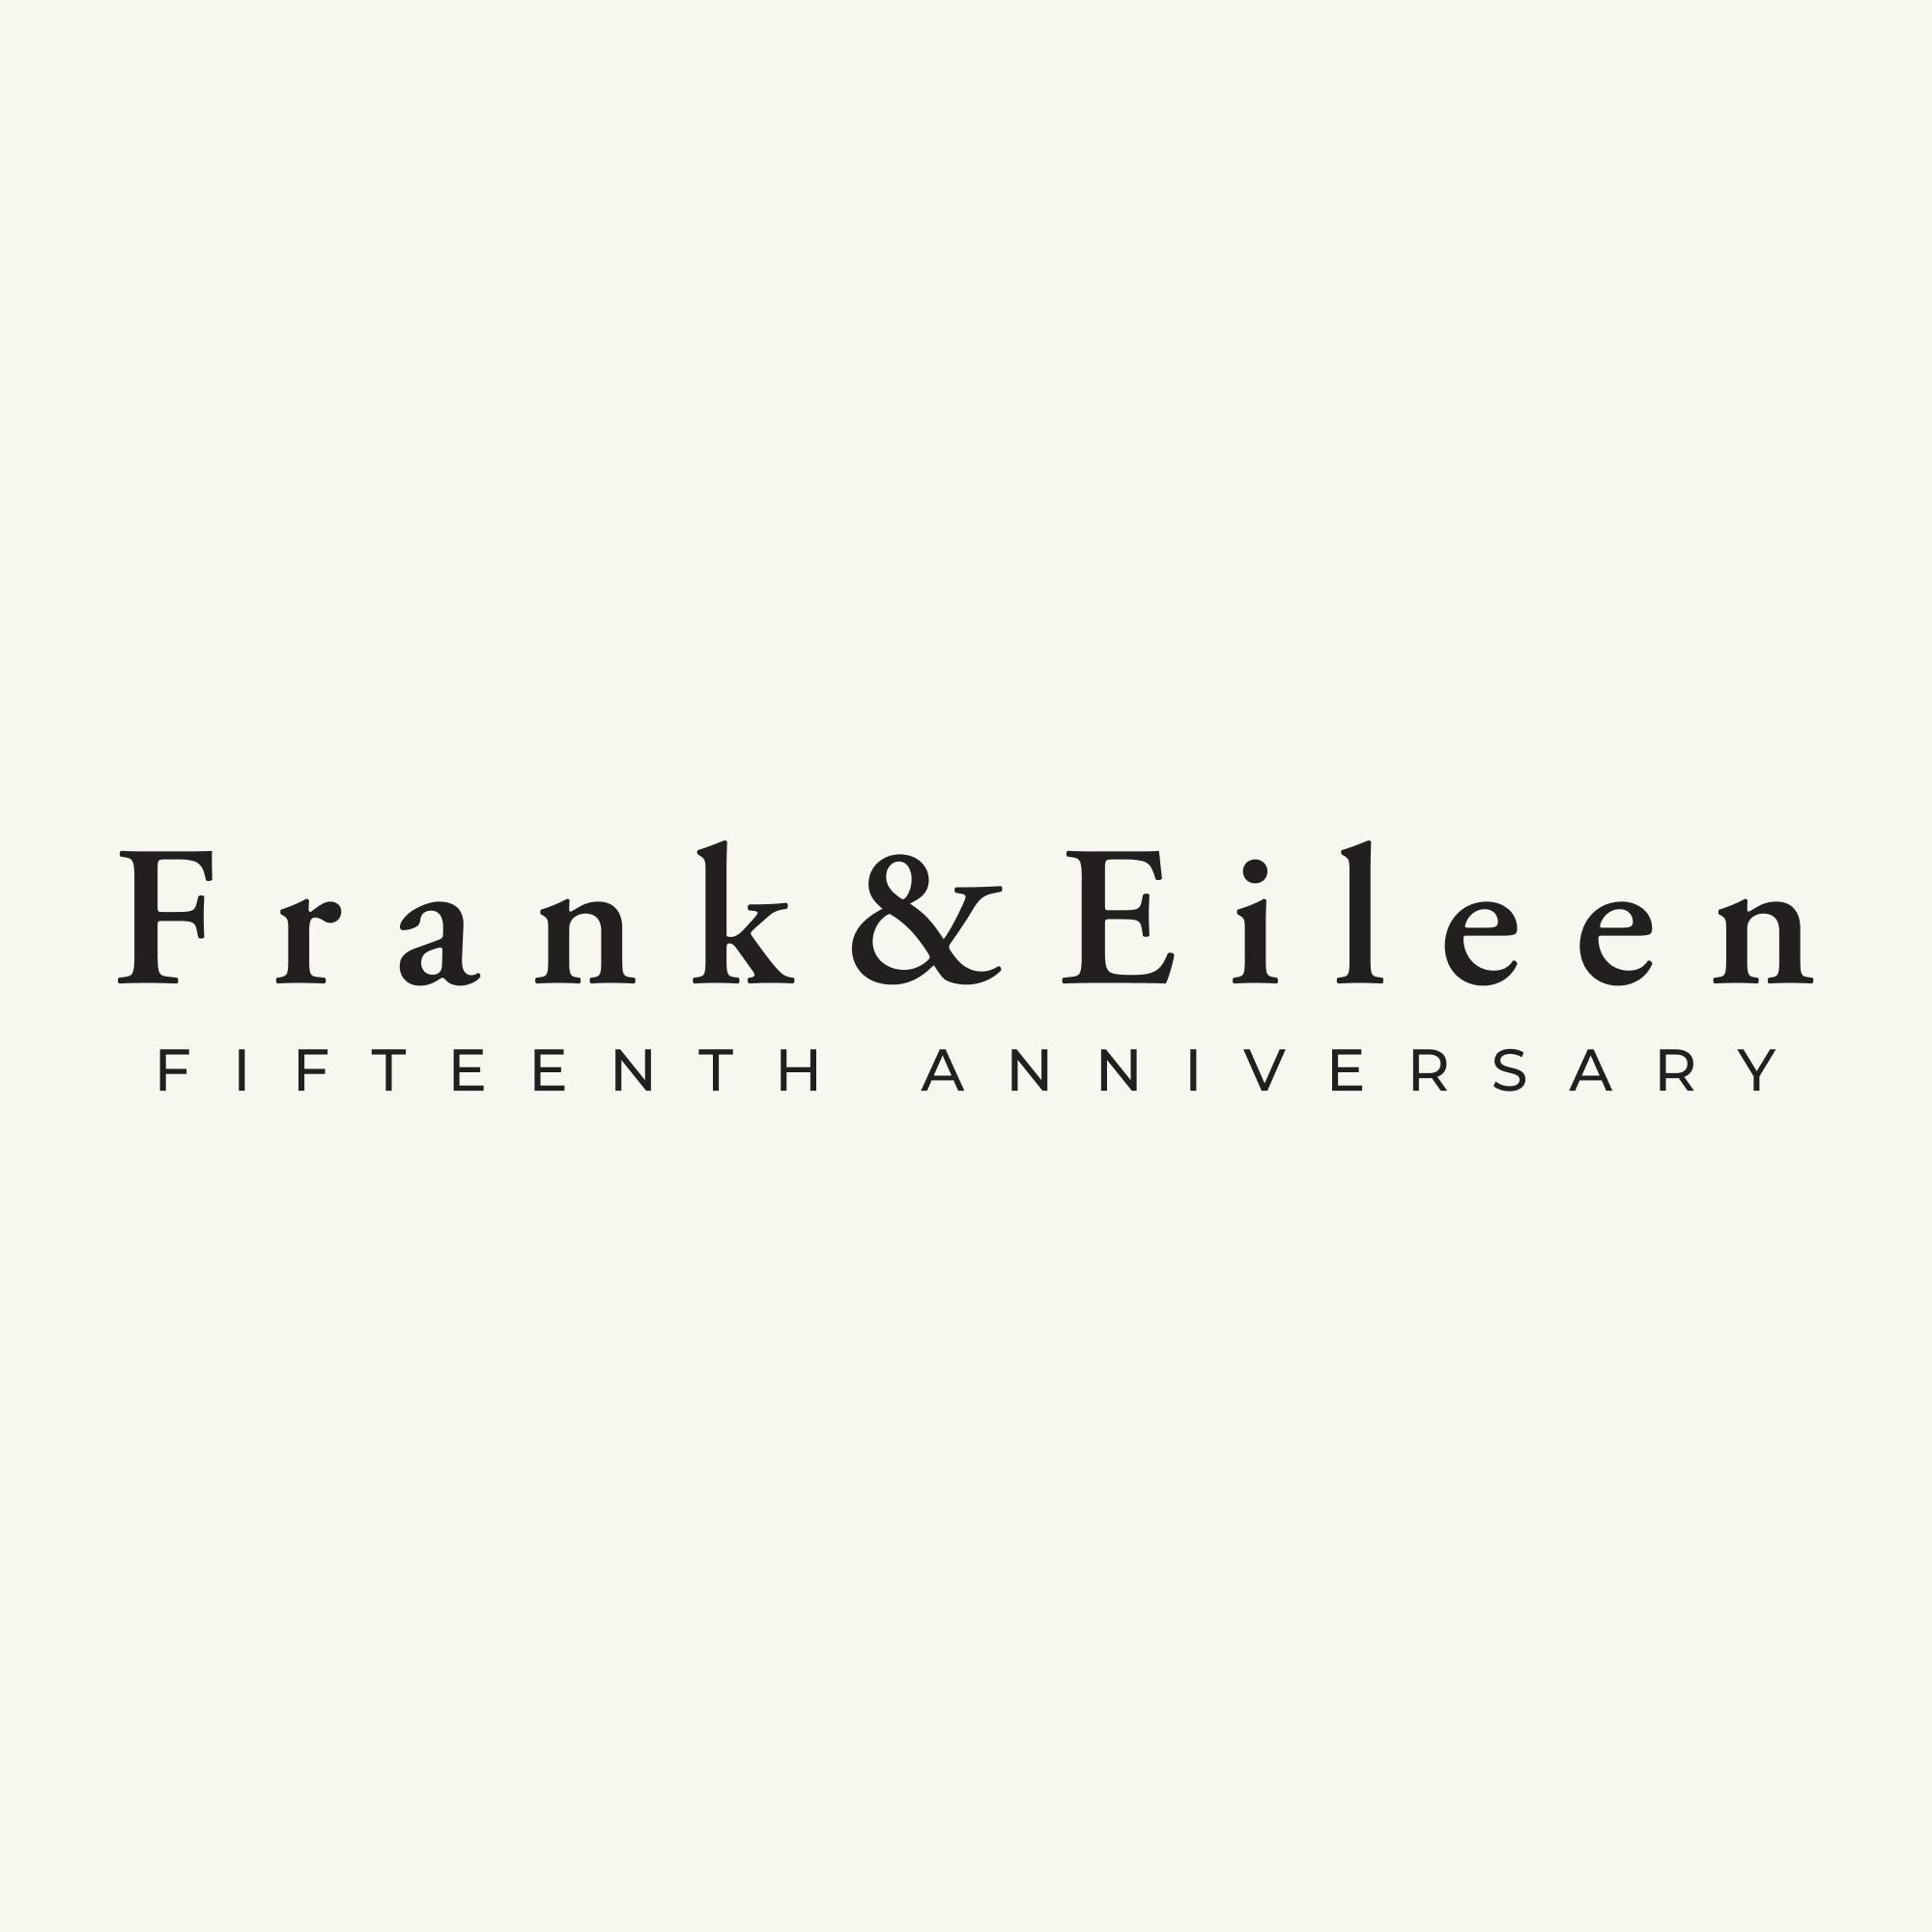 Frank & Eileen – 15% Off Sitewide